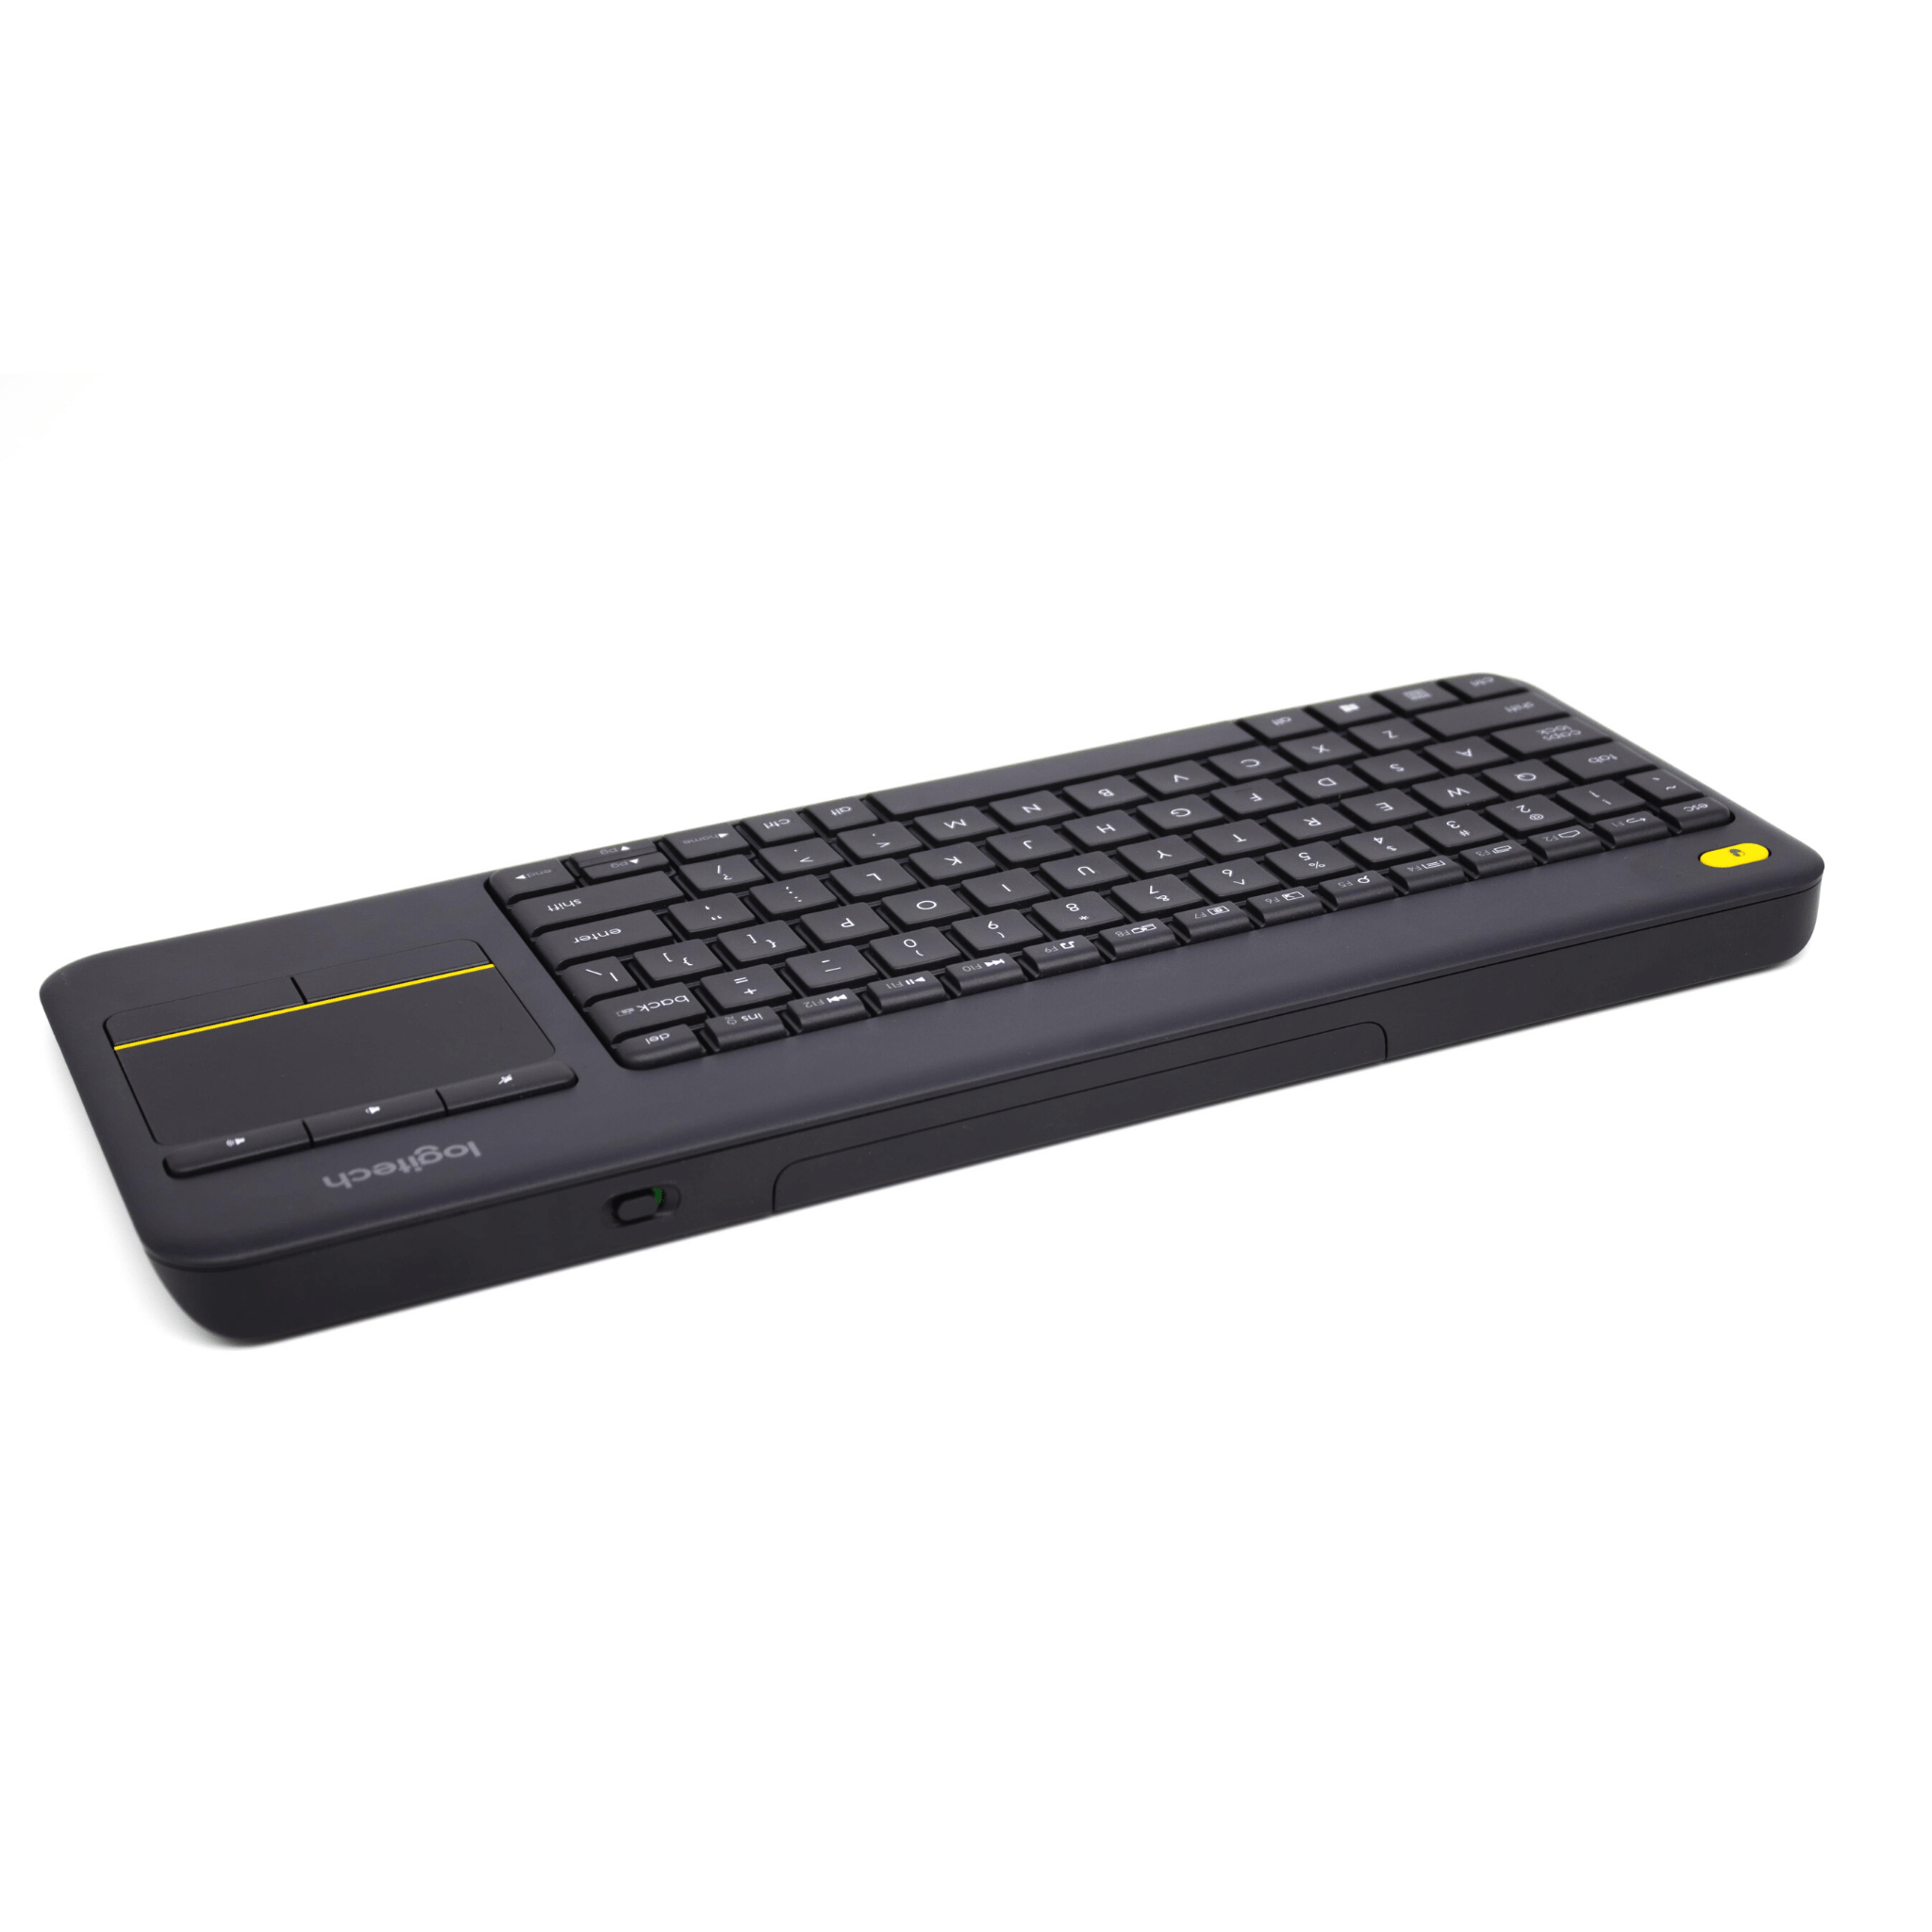 abstraktion Eller senere Installere Logitech K400 Wireless Keyboard